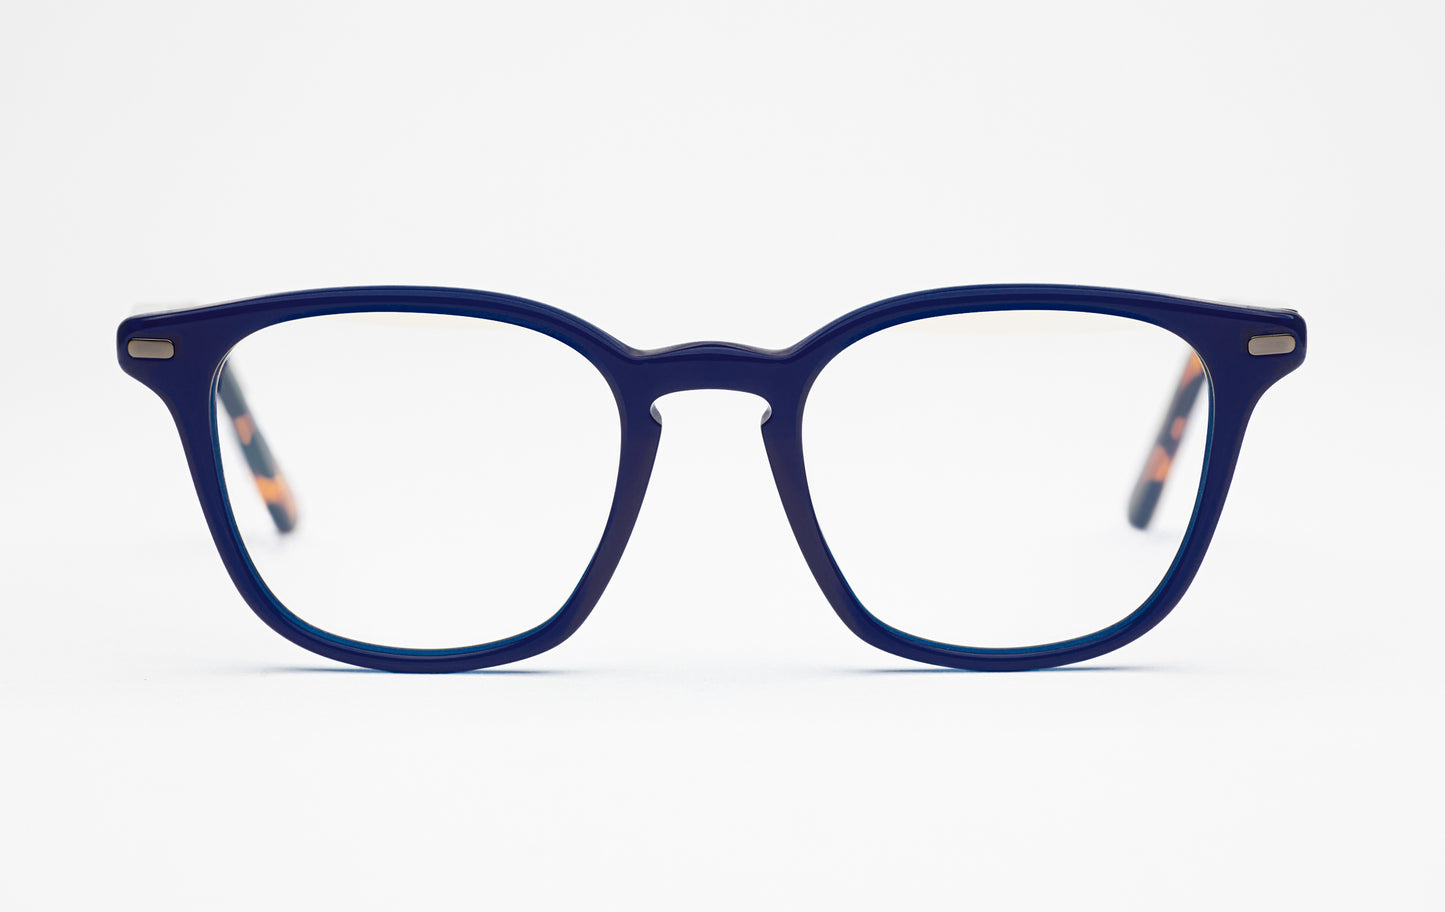 The Altruist | Square Designer Prescription Glasses with Low Nose Bridge - Blue Frames with Tortoiseshell Stems